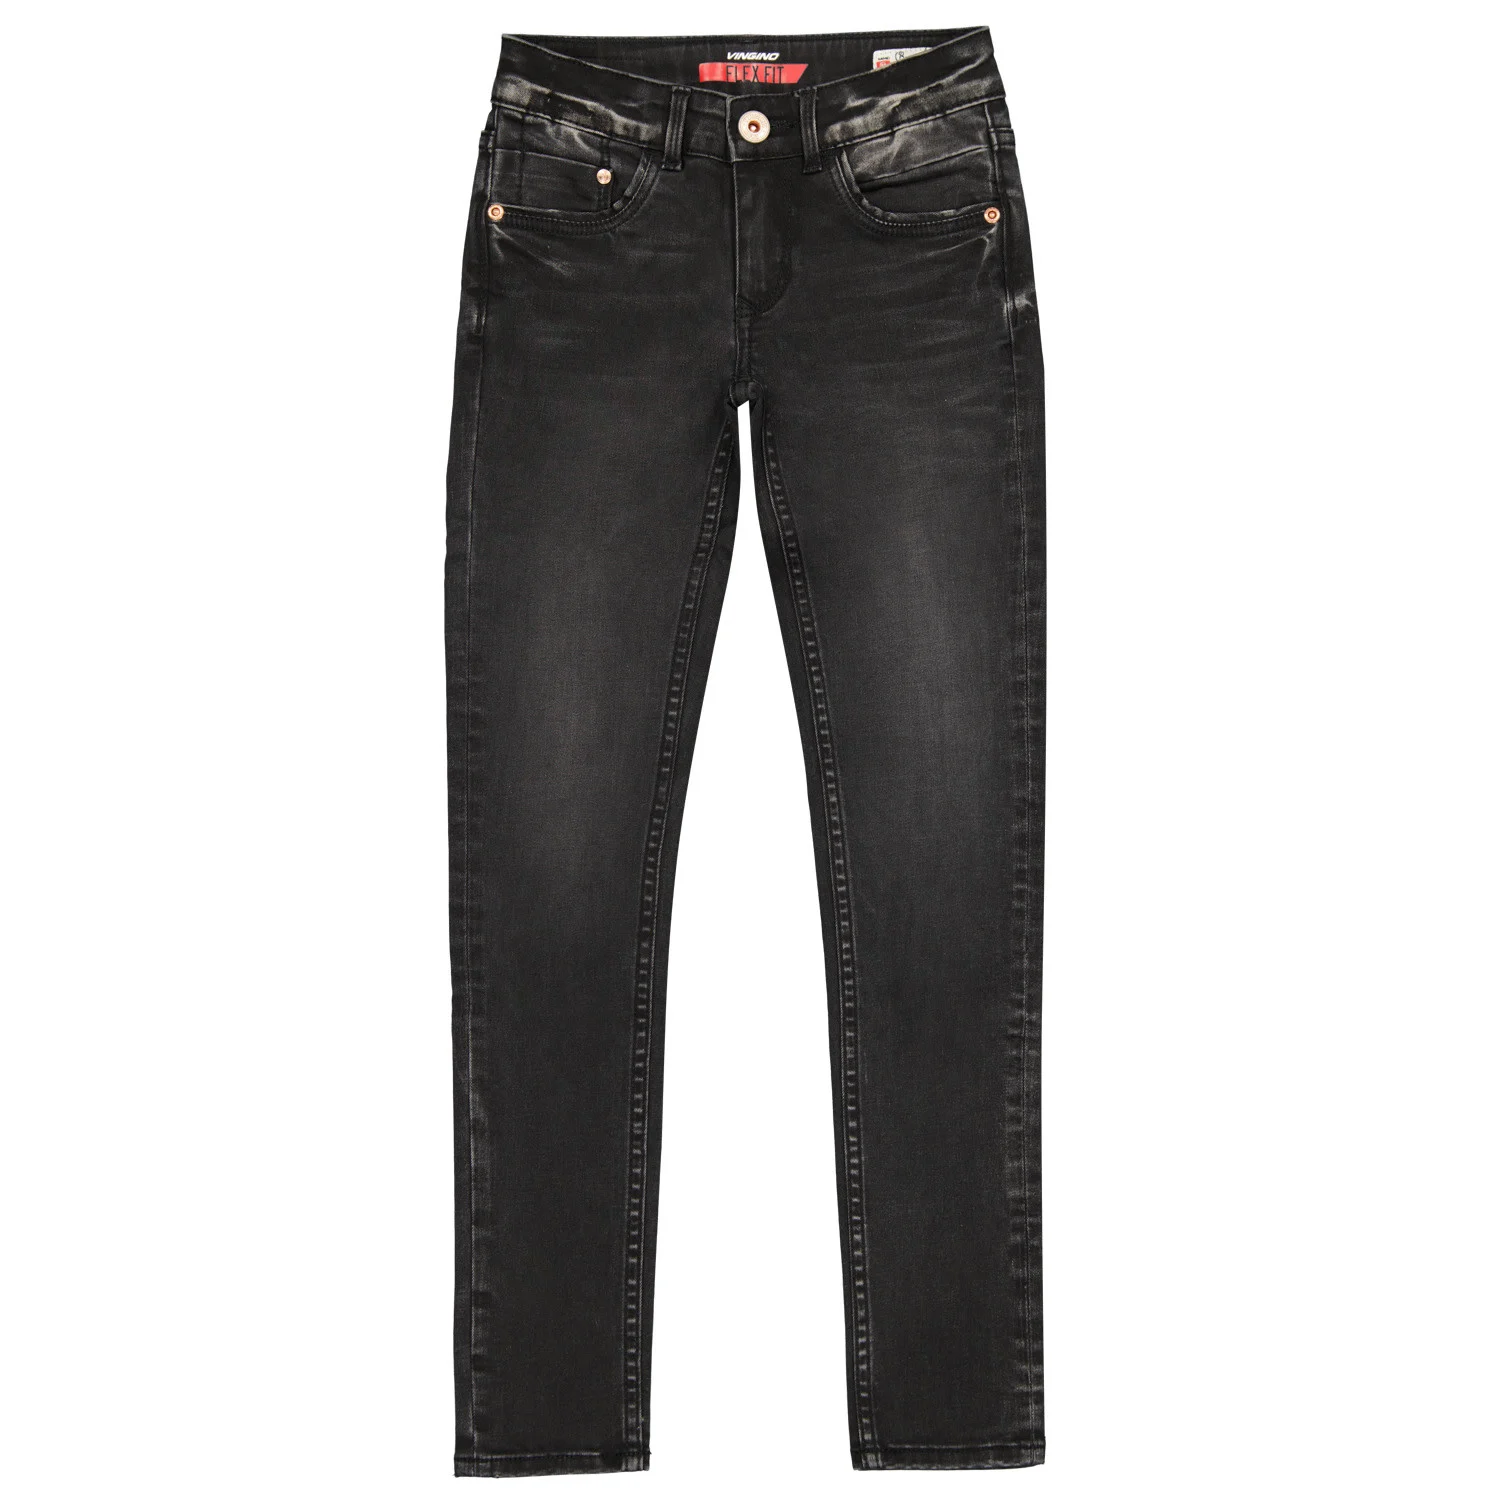 Afbeelding van Vingino Meiden jeans super skinny flex fit bernice black vintage